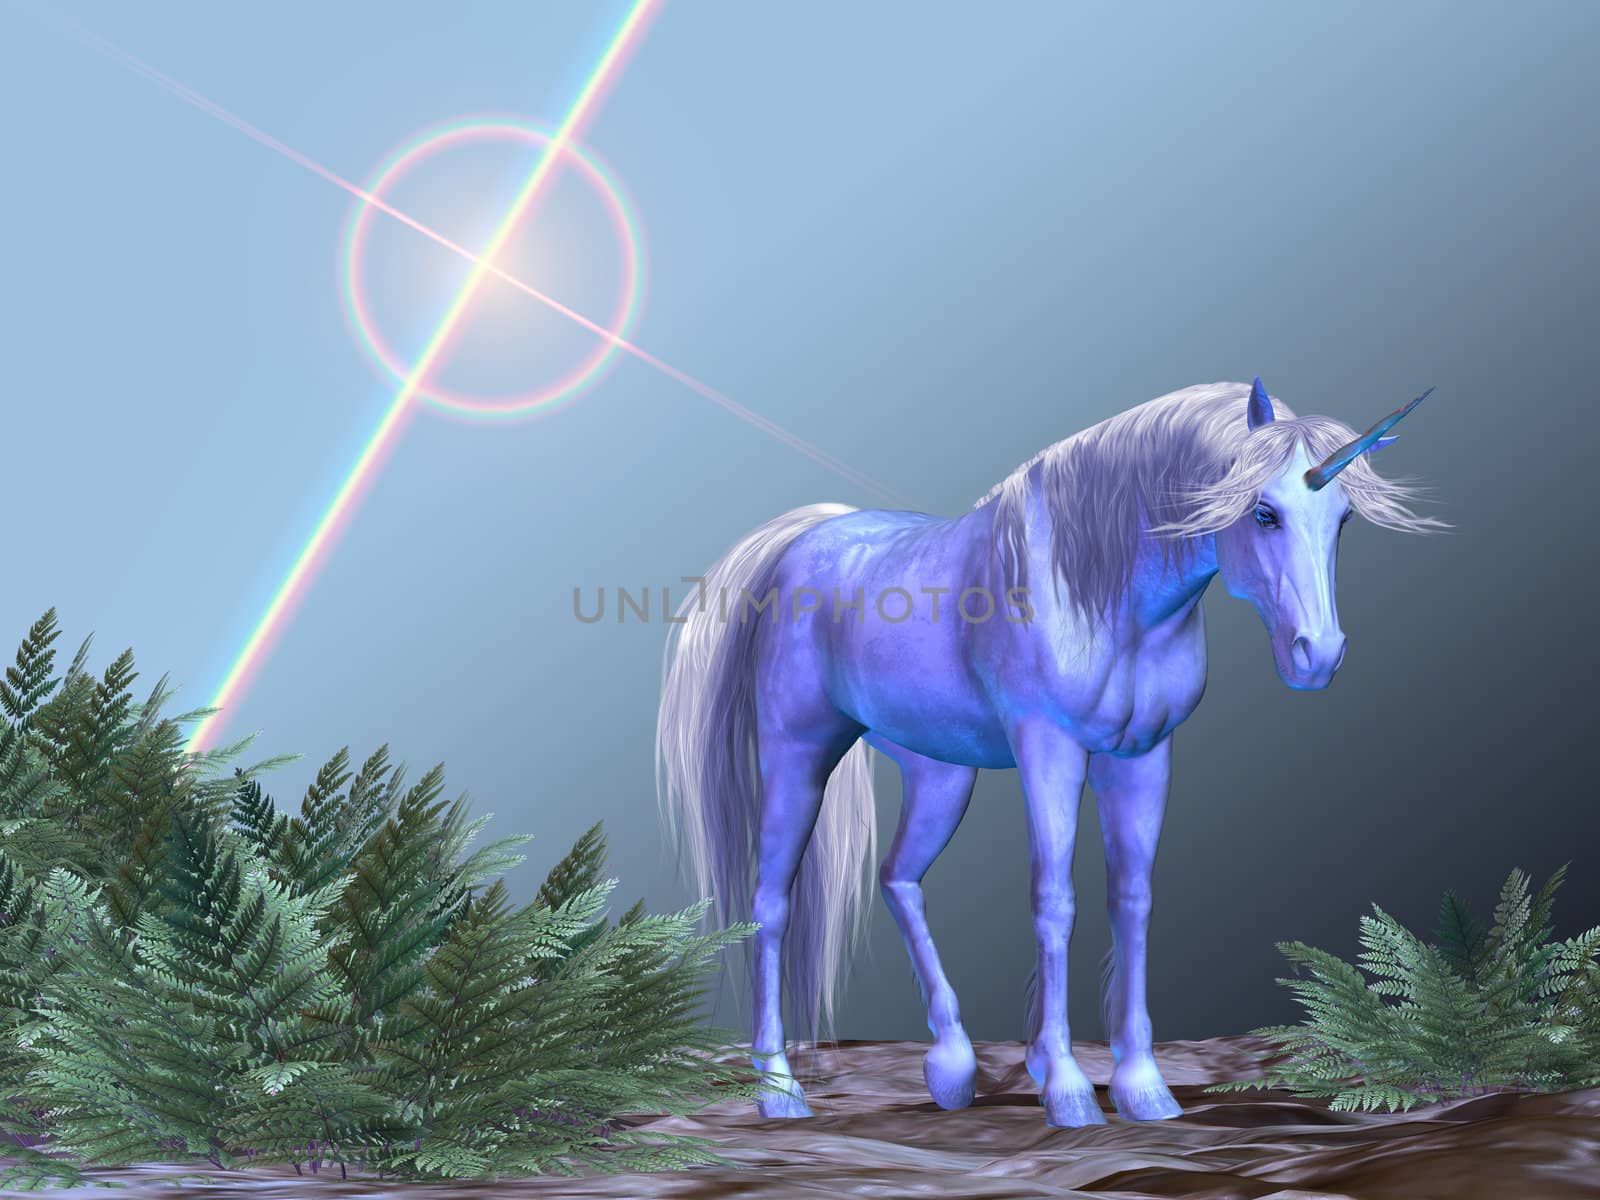 A white unicorn rests under a bright star.